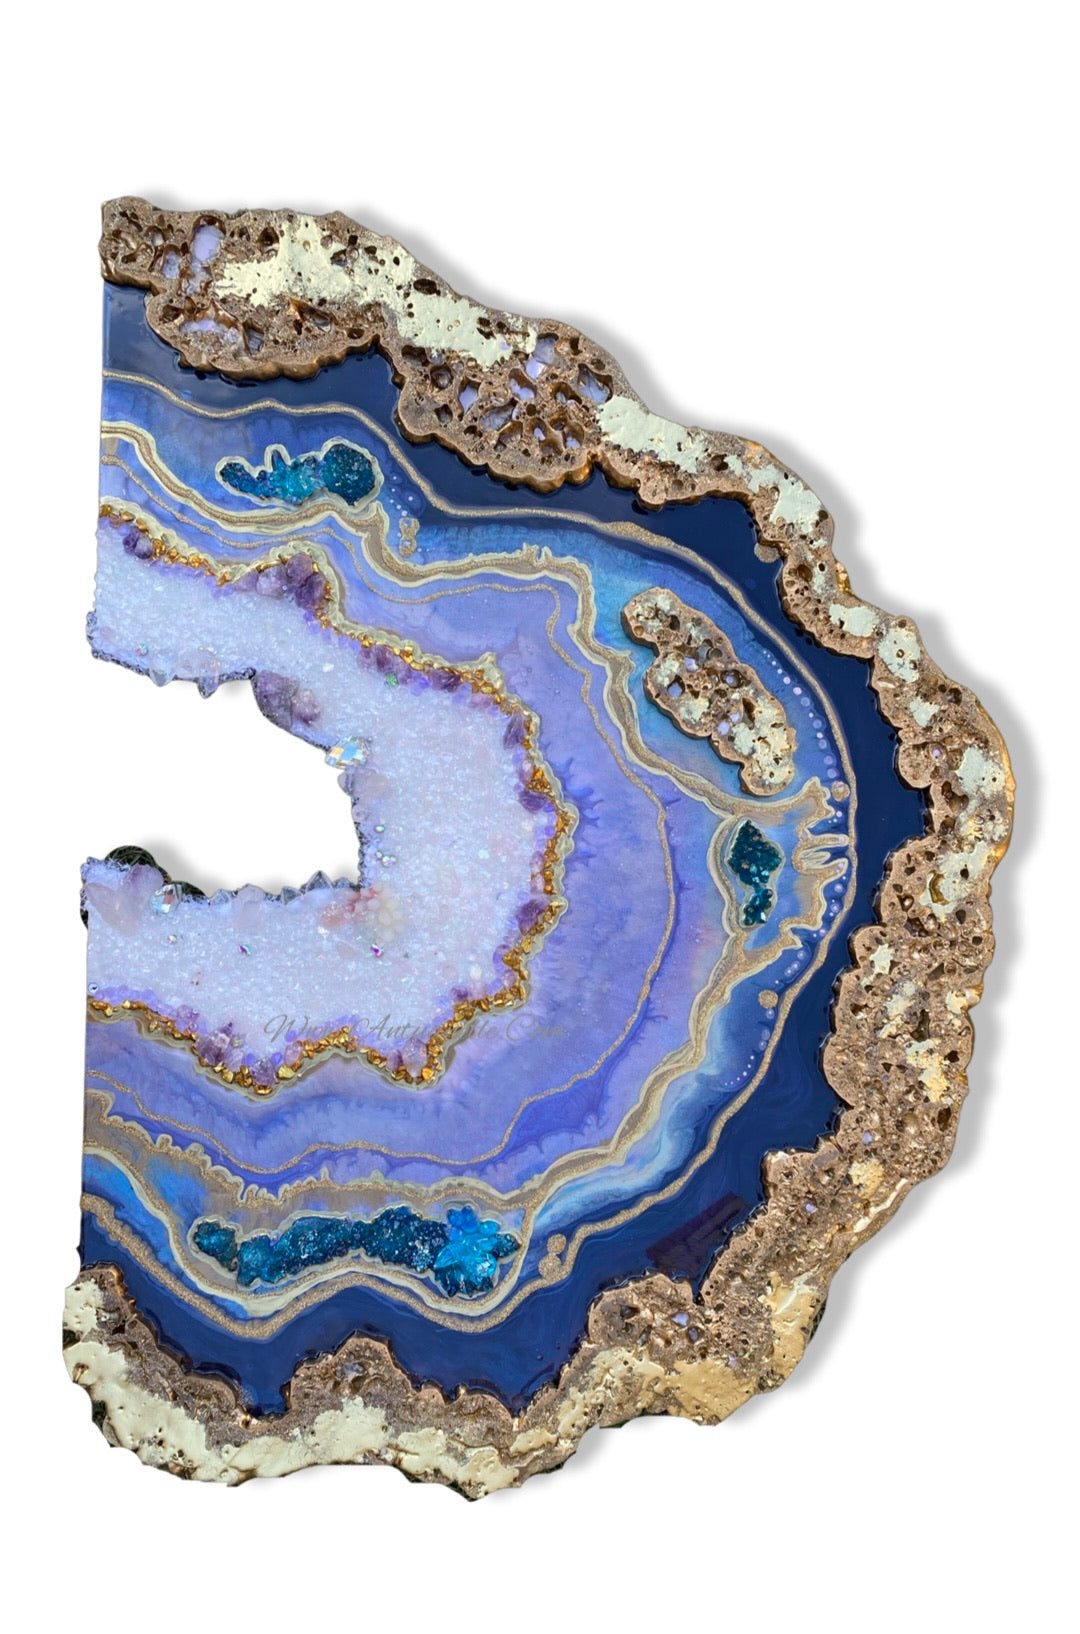 Amethyst Geode. Freeform Purple and Gold Geode Gemstone Artwork with Amethysts